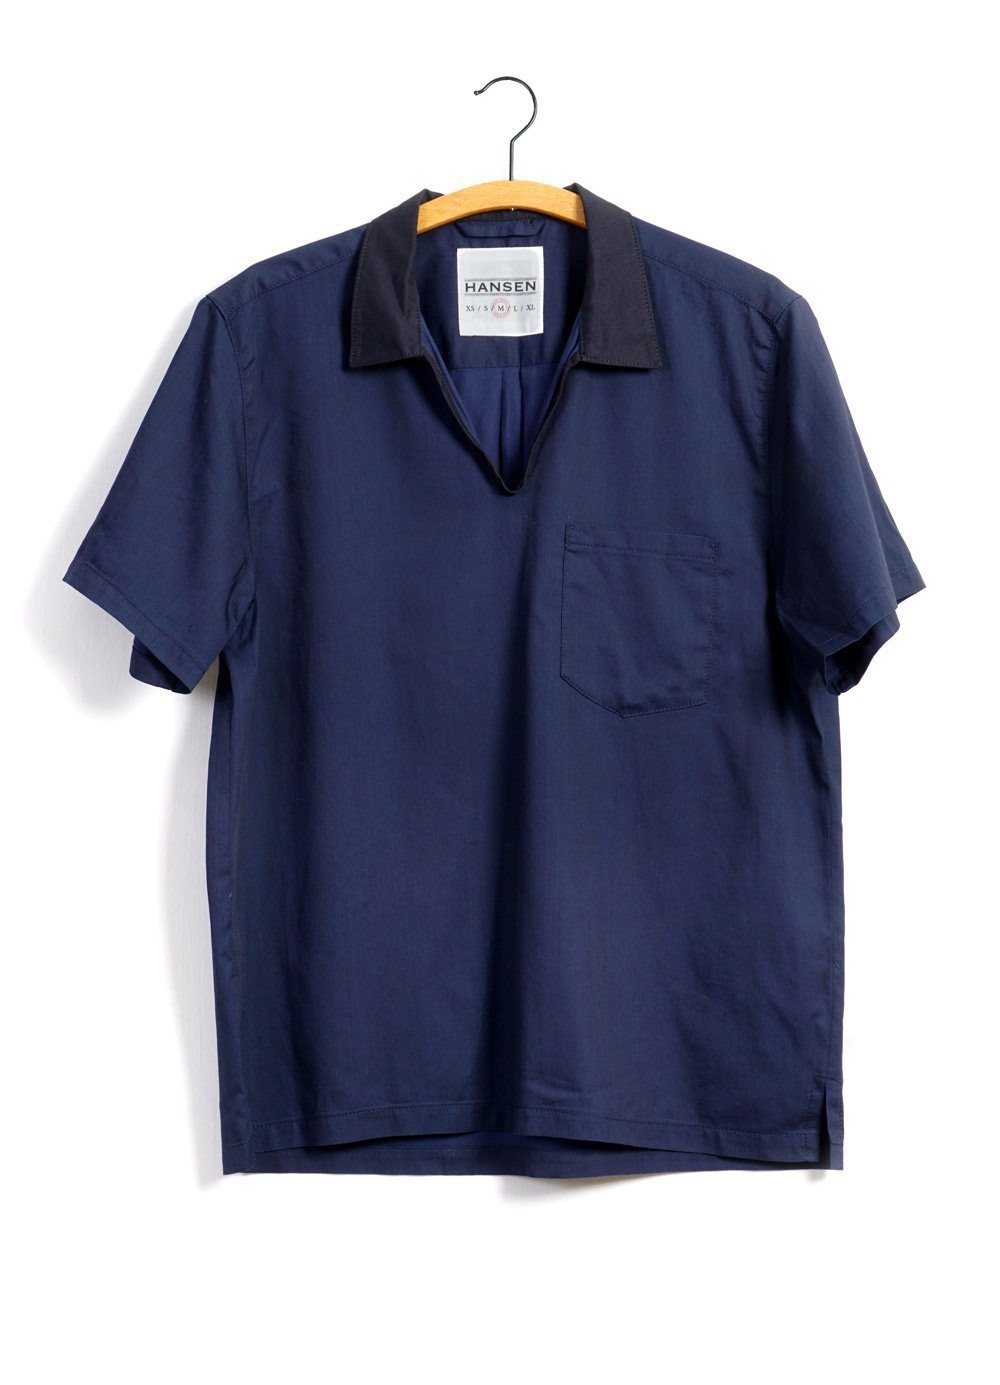 PHILLIP | Short Sleeve Pull-On Shirt | Indigo -HANSEN Garments- HANSEN Garments